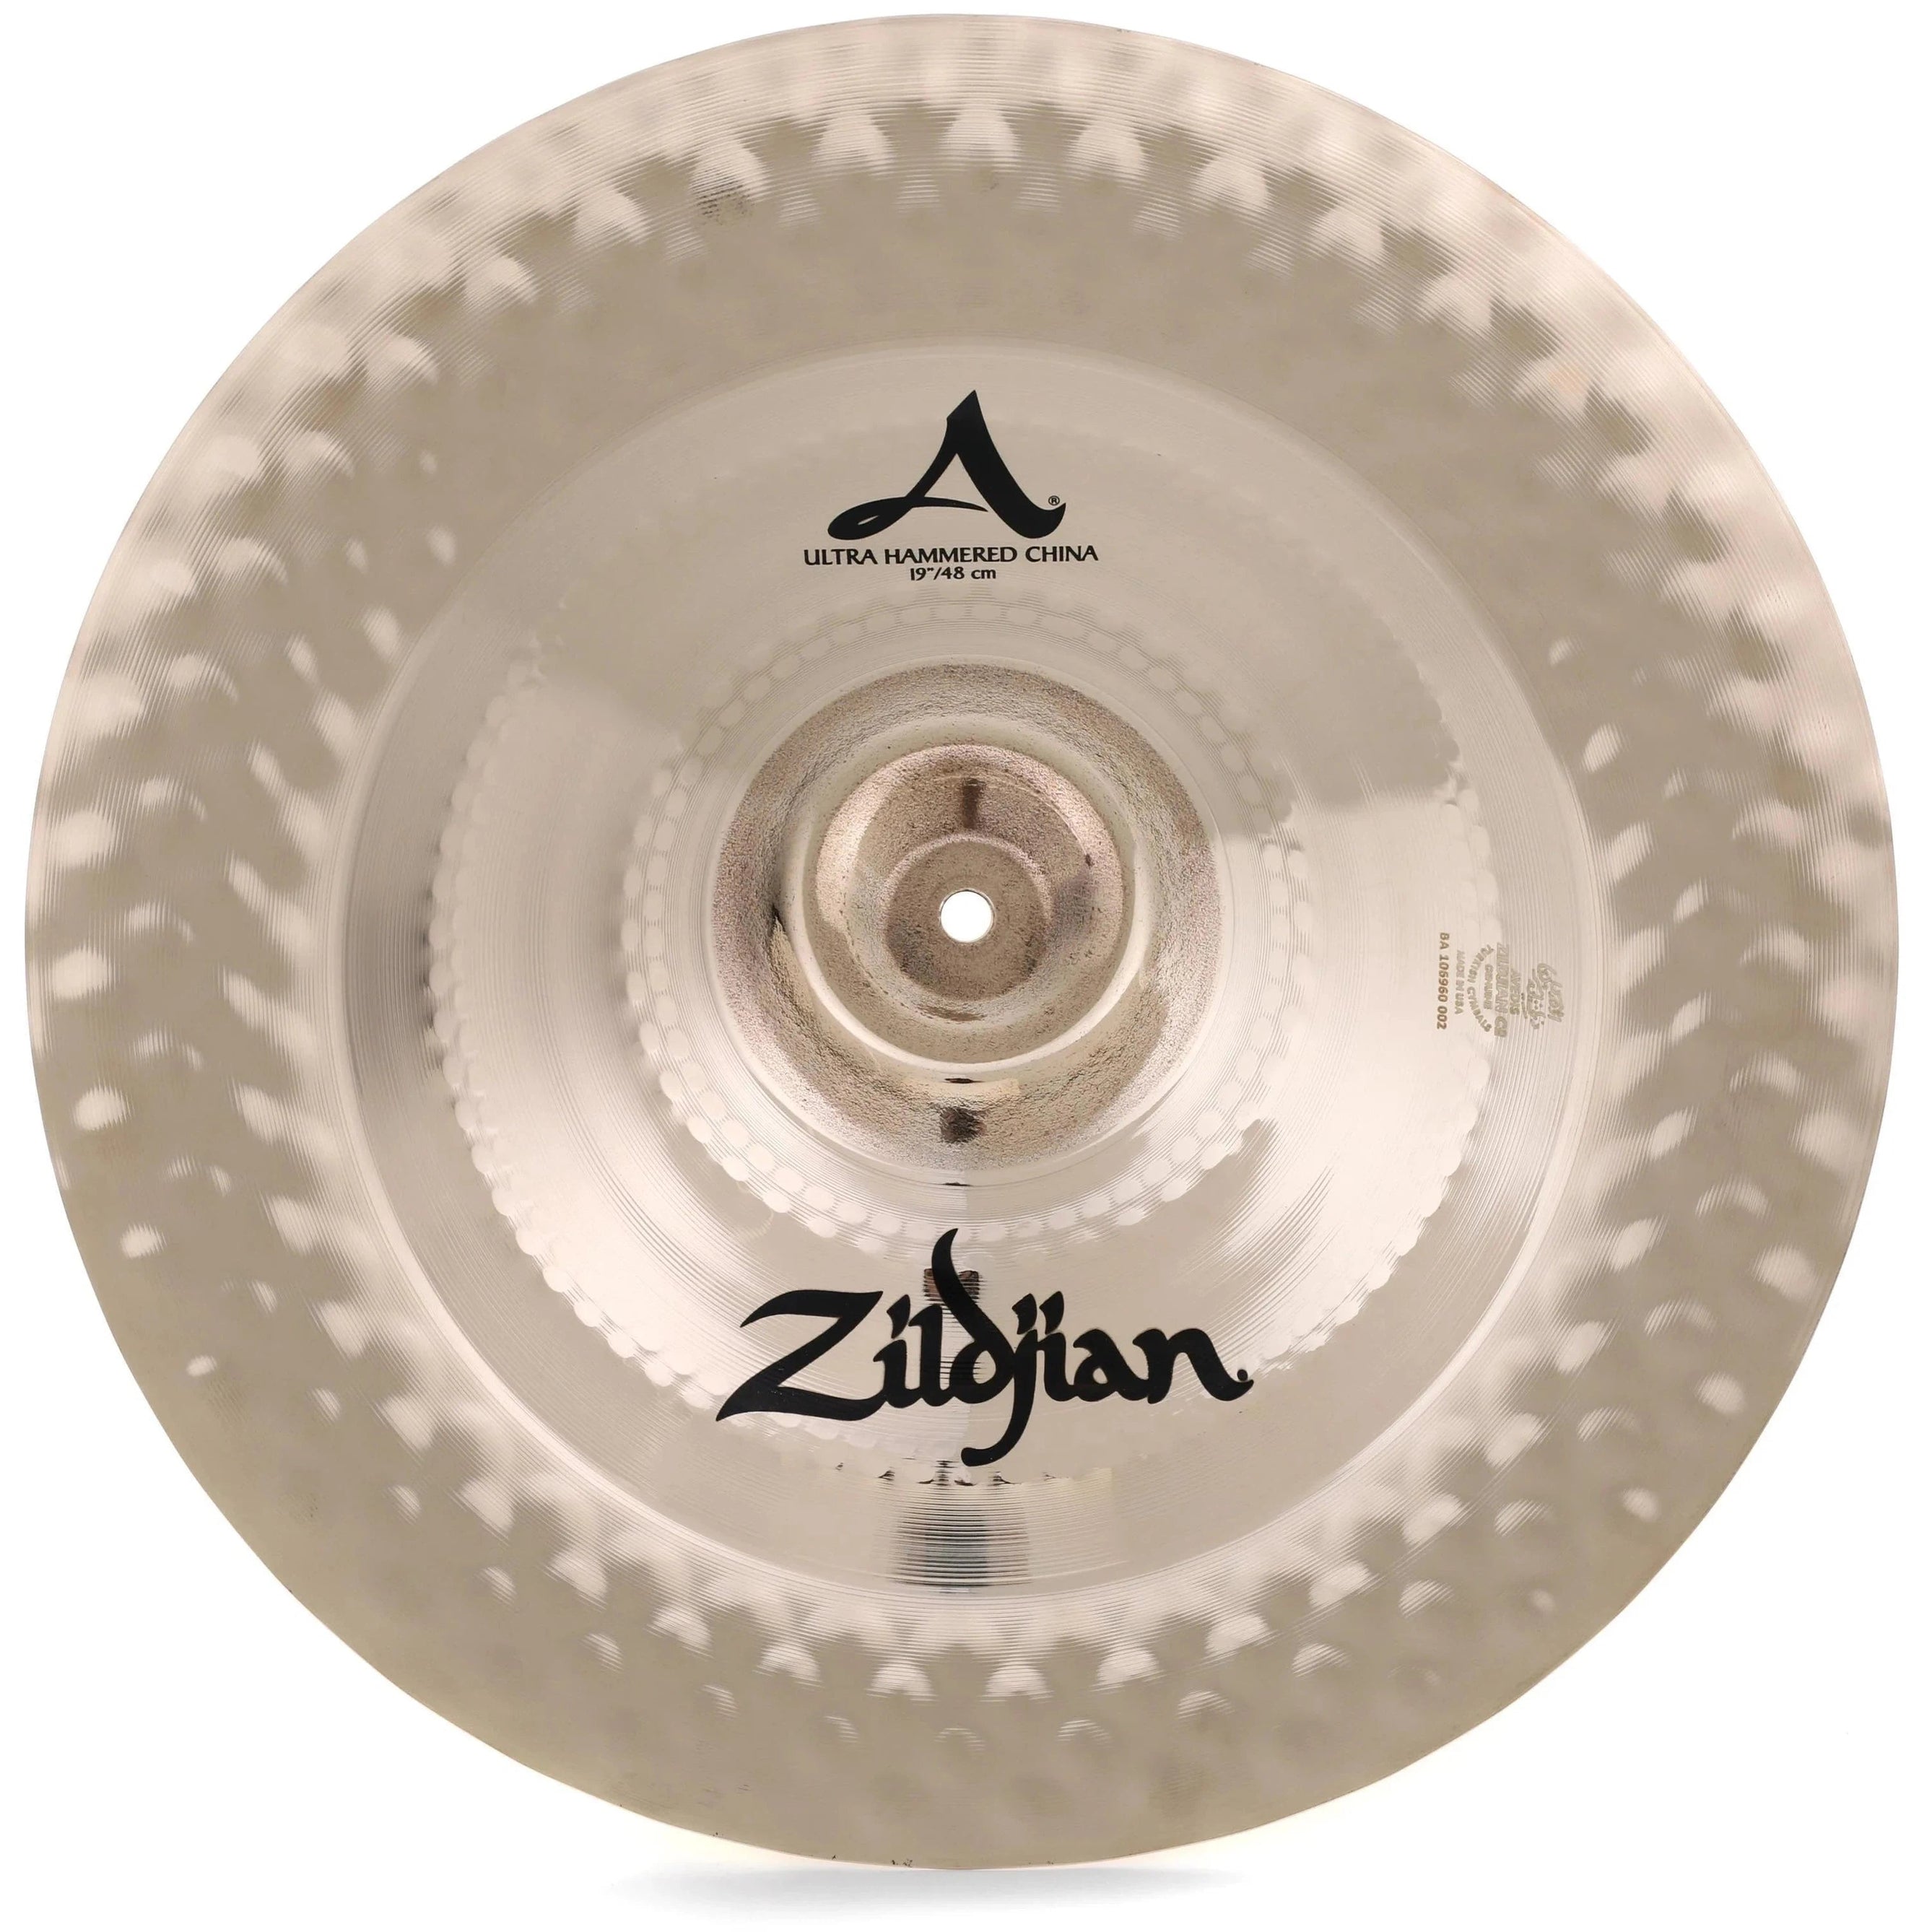 FX Cymbal Zildjian A Ultra Hammered China-Mai Nguyên Music